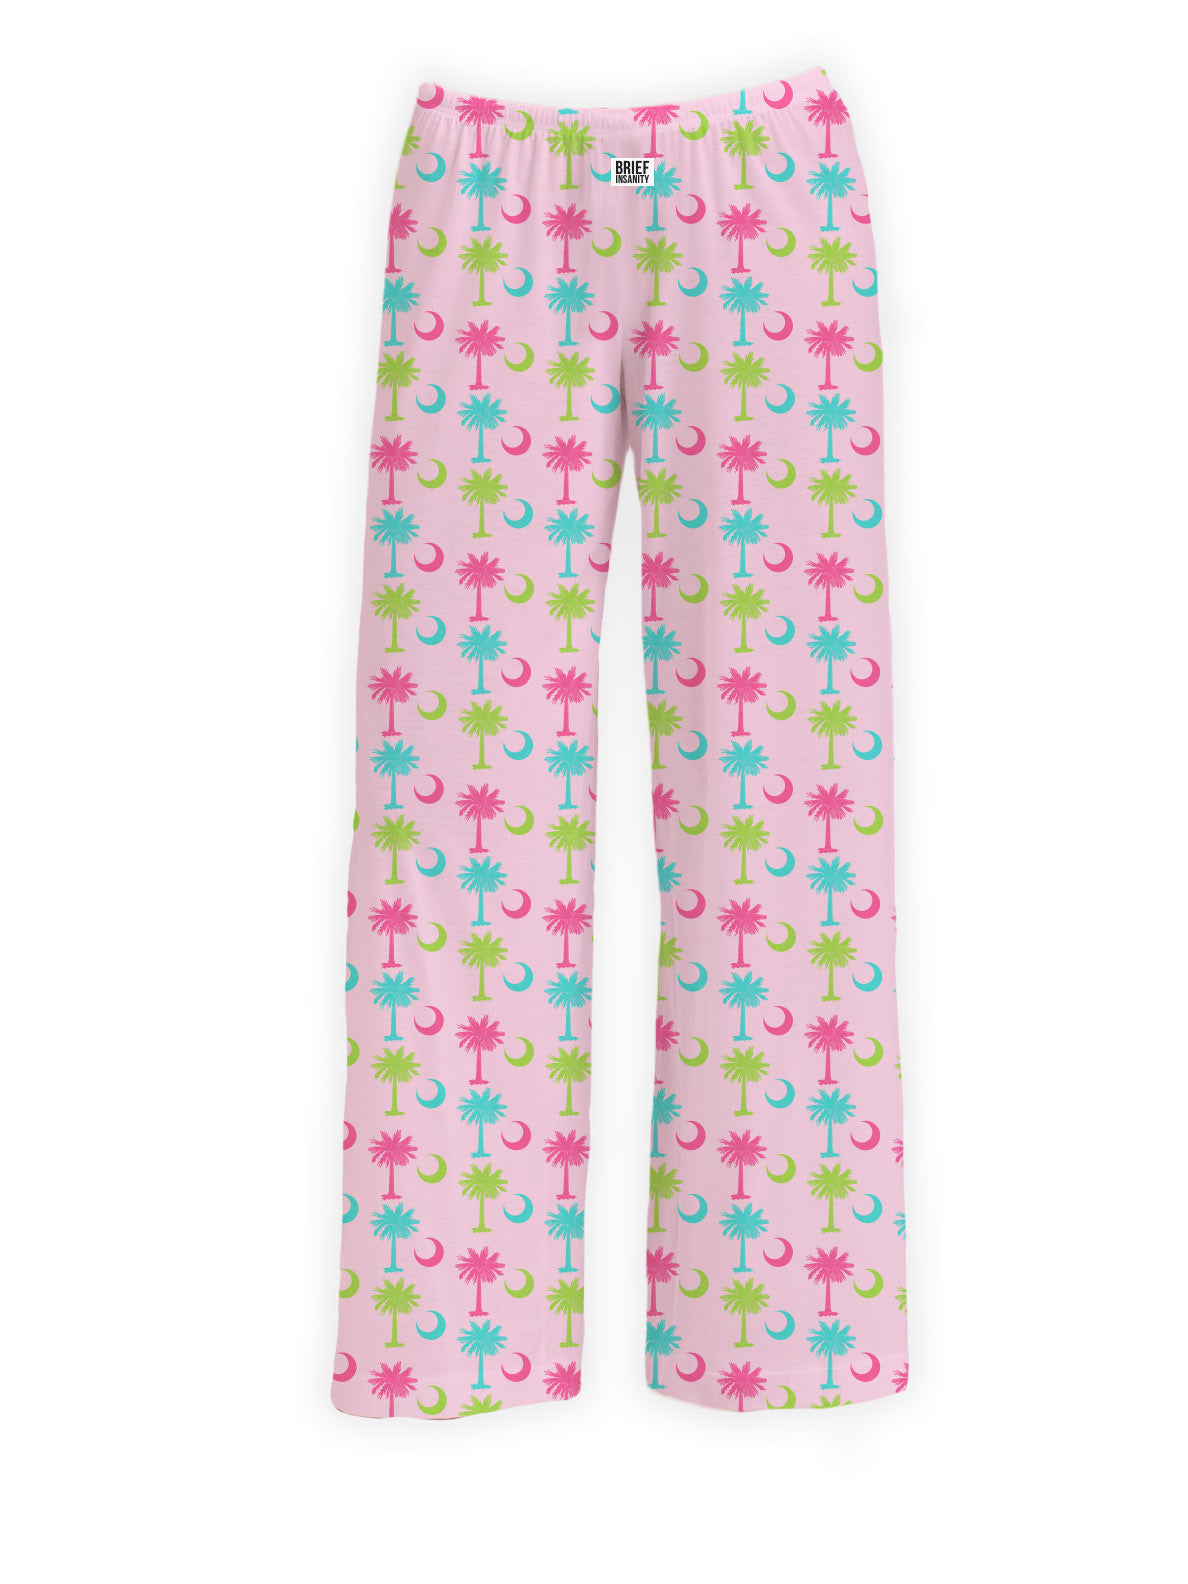 BRIEF INSANITY Palm Tree & Moon Neon Pattern Pajama Pants